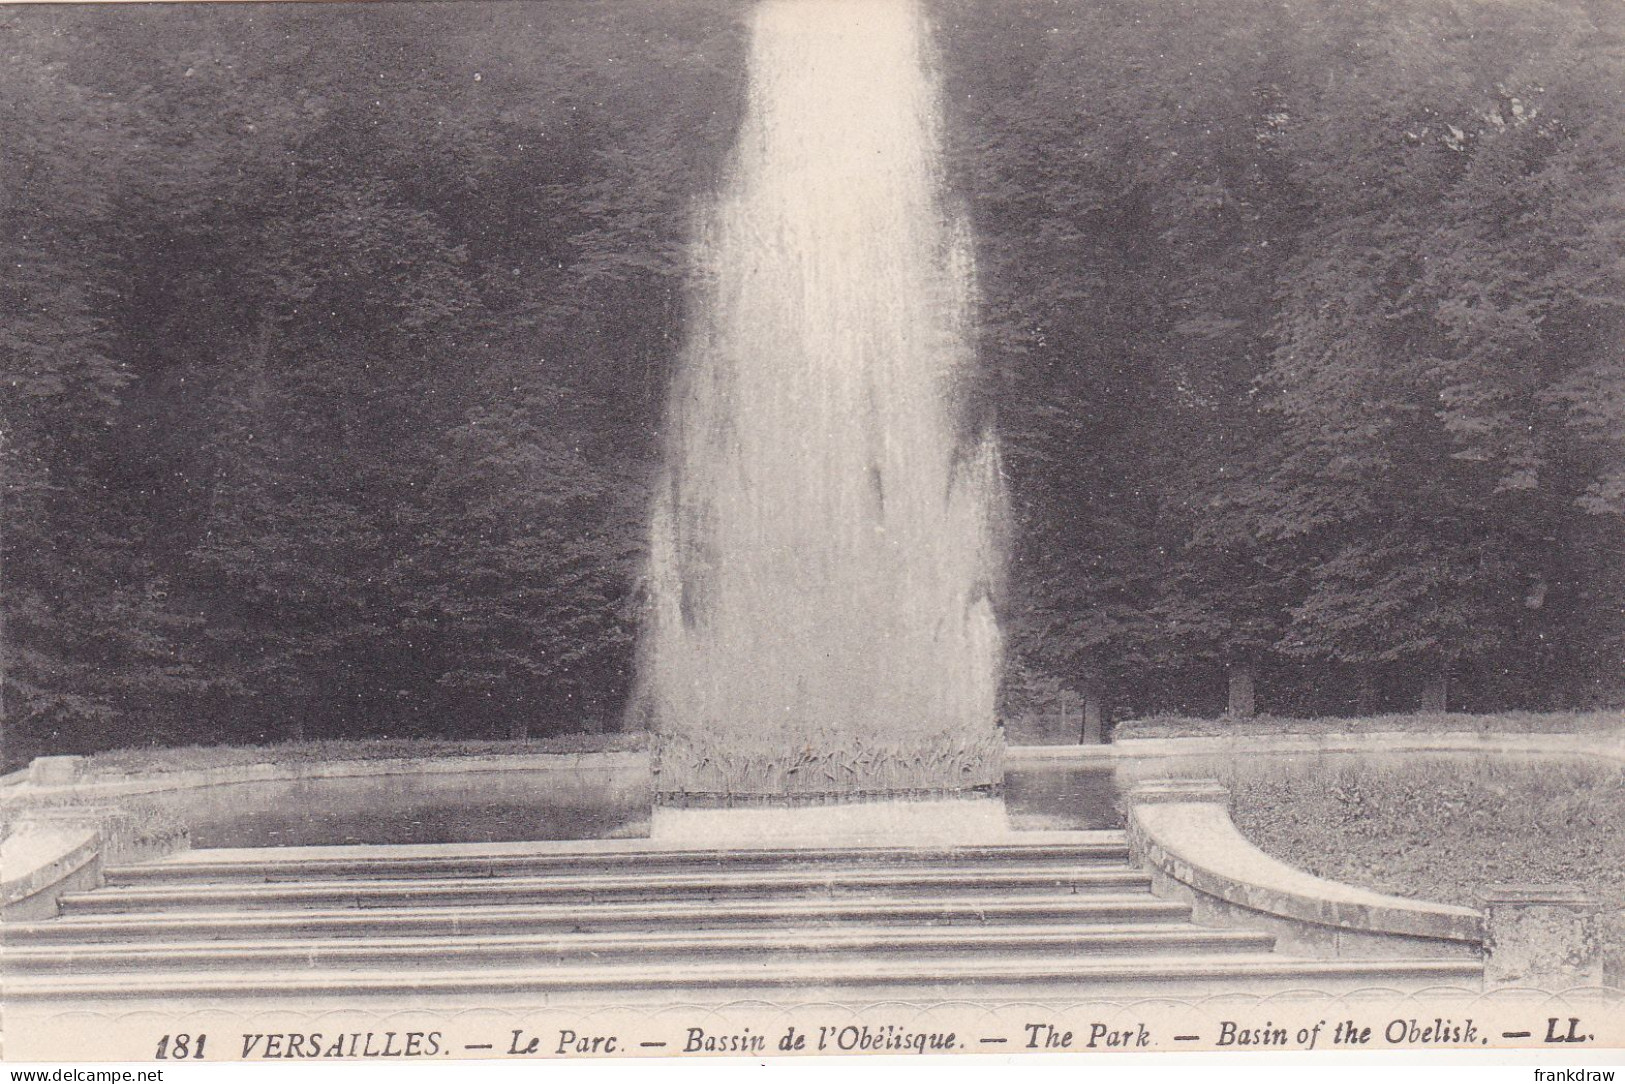 Postcard - Versailles - Le Parc - Bassin De I'Obelisque - The Park - Basin Of The Obelisk - Card No. 181 - VG - Unclassified